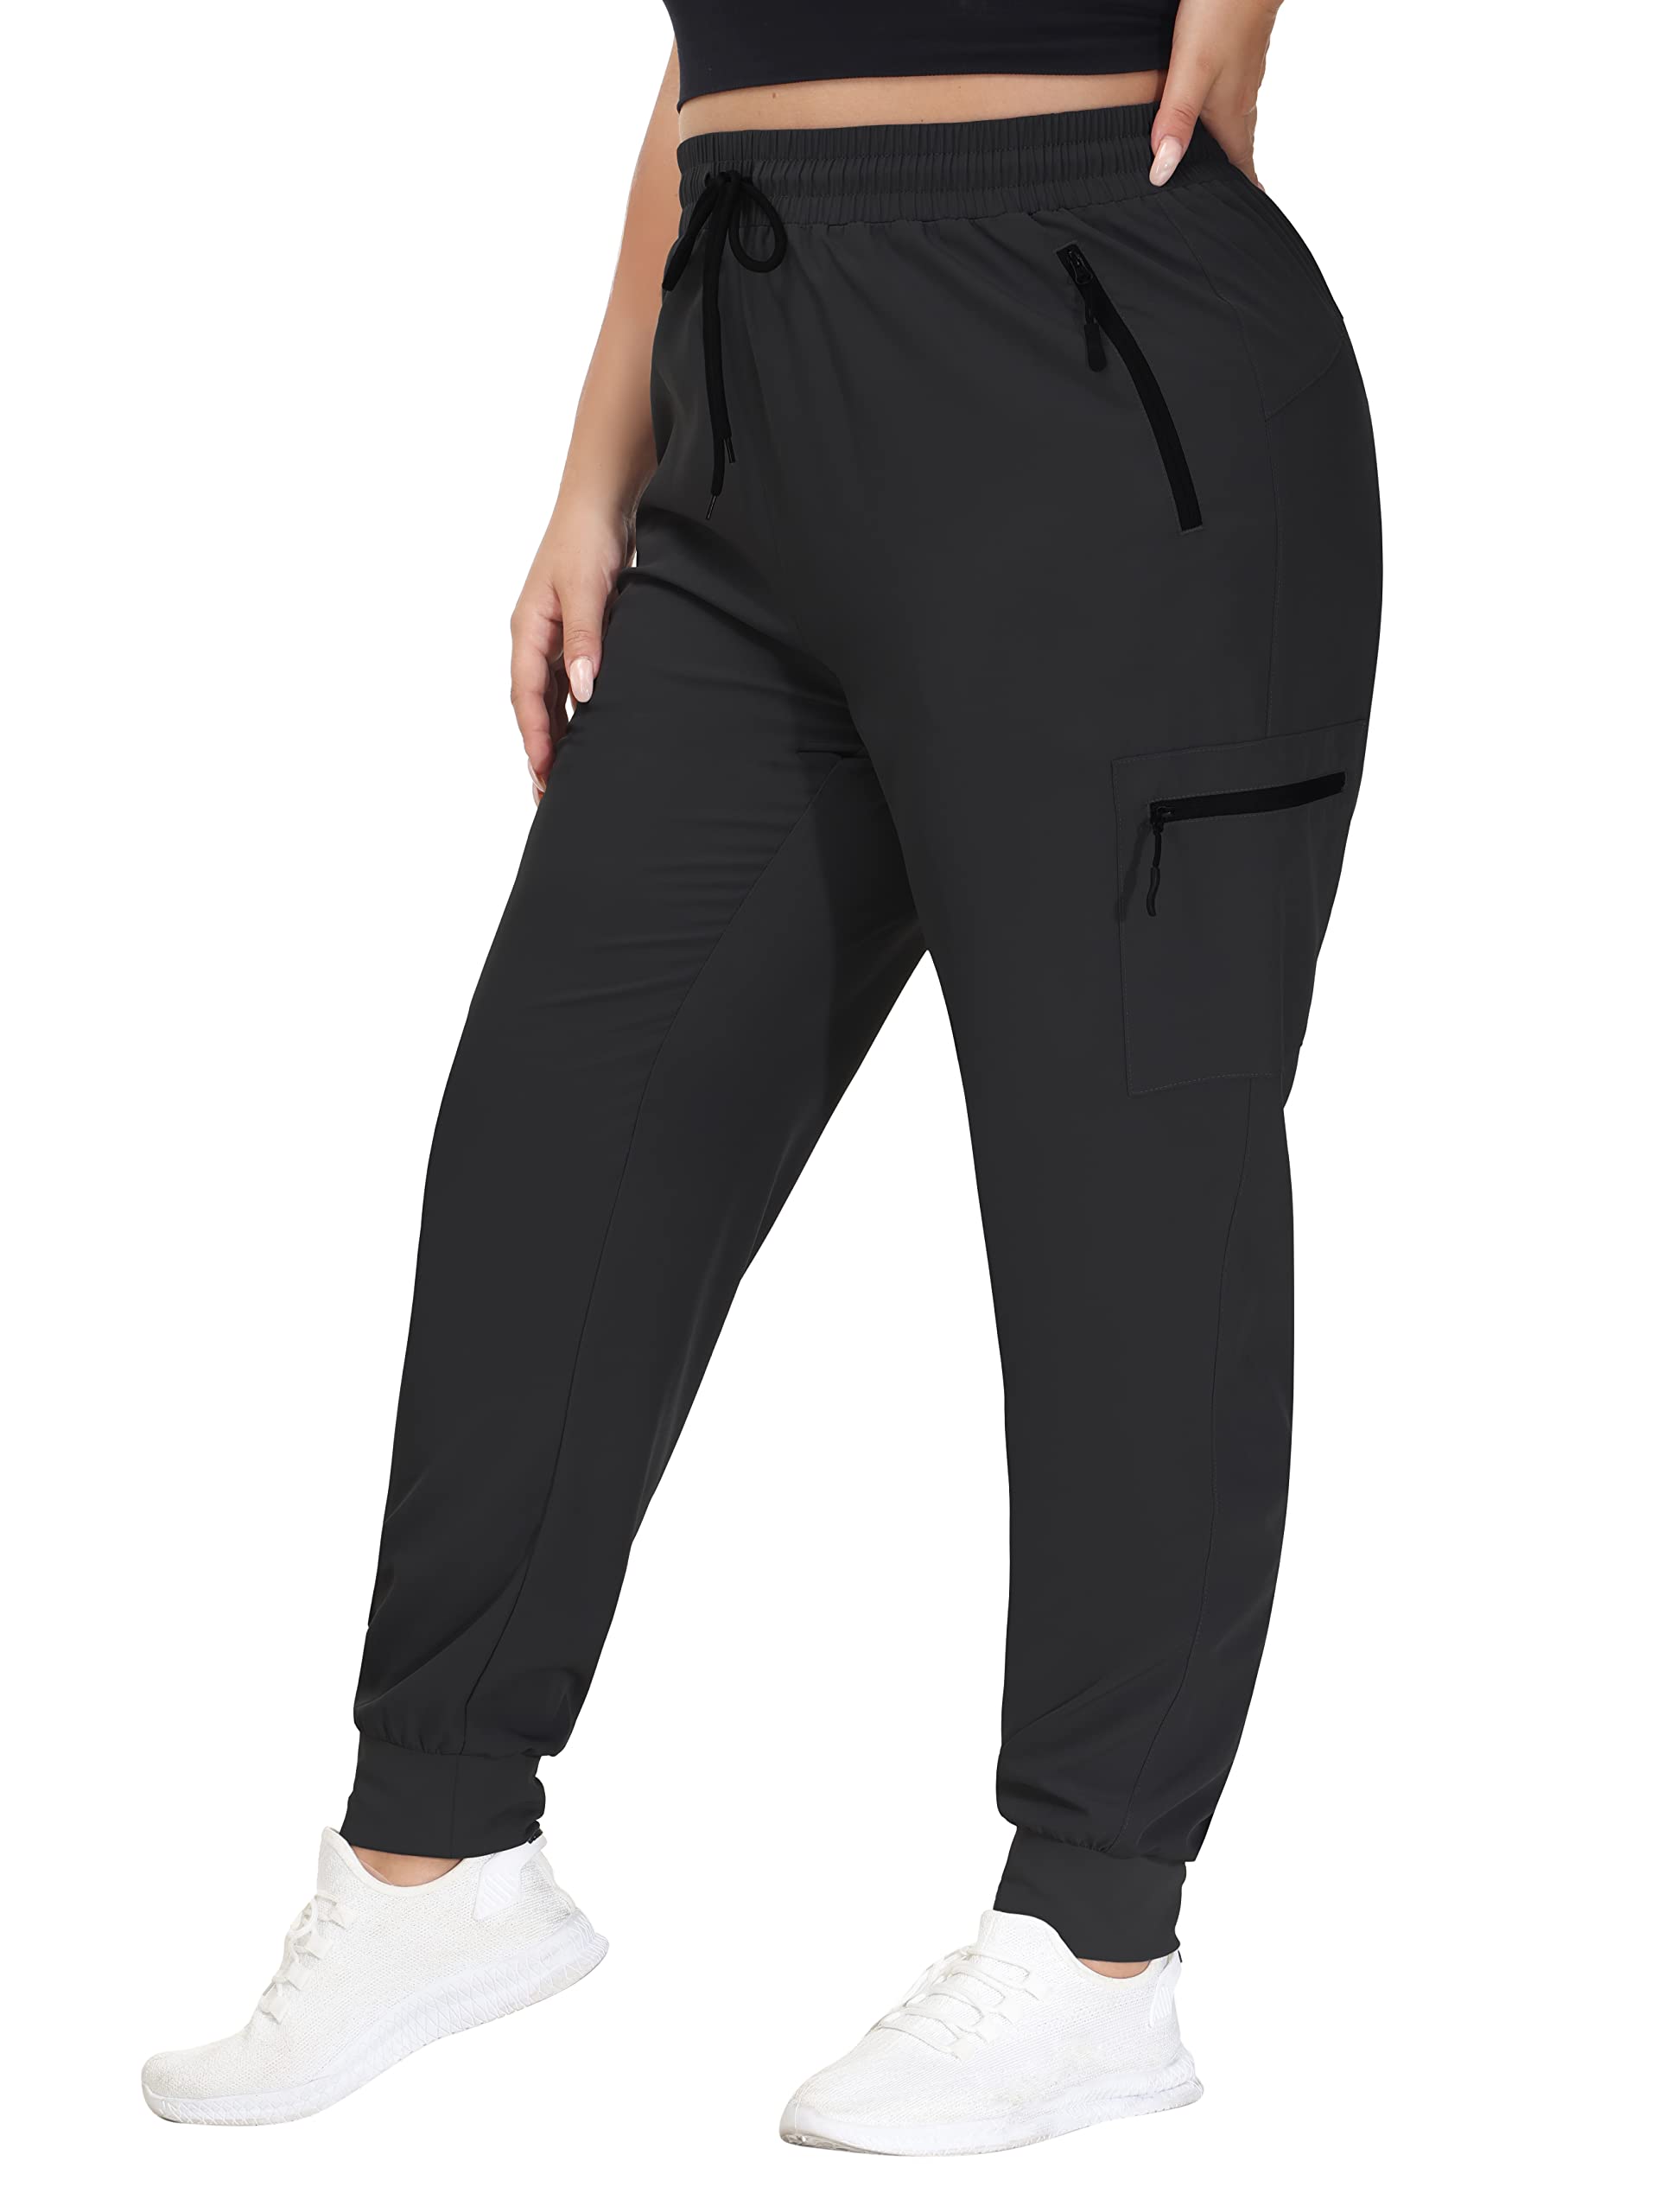 St Johns Bay Womens Active Pants Size 10 36 x 31 Cargo Black Zipper Pockets